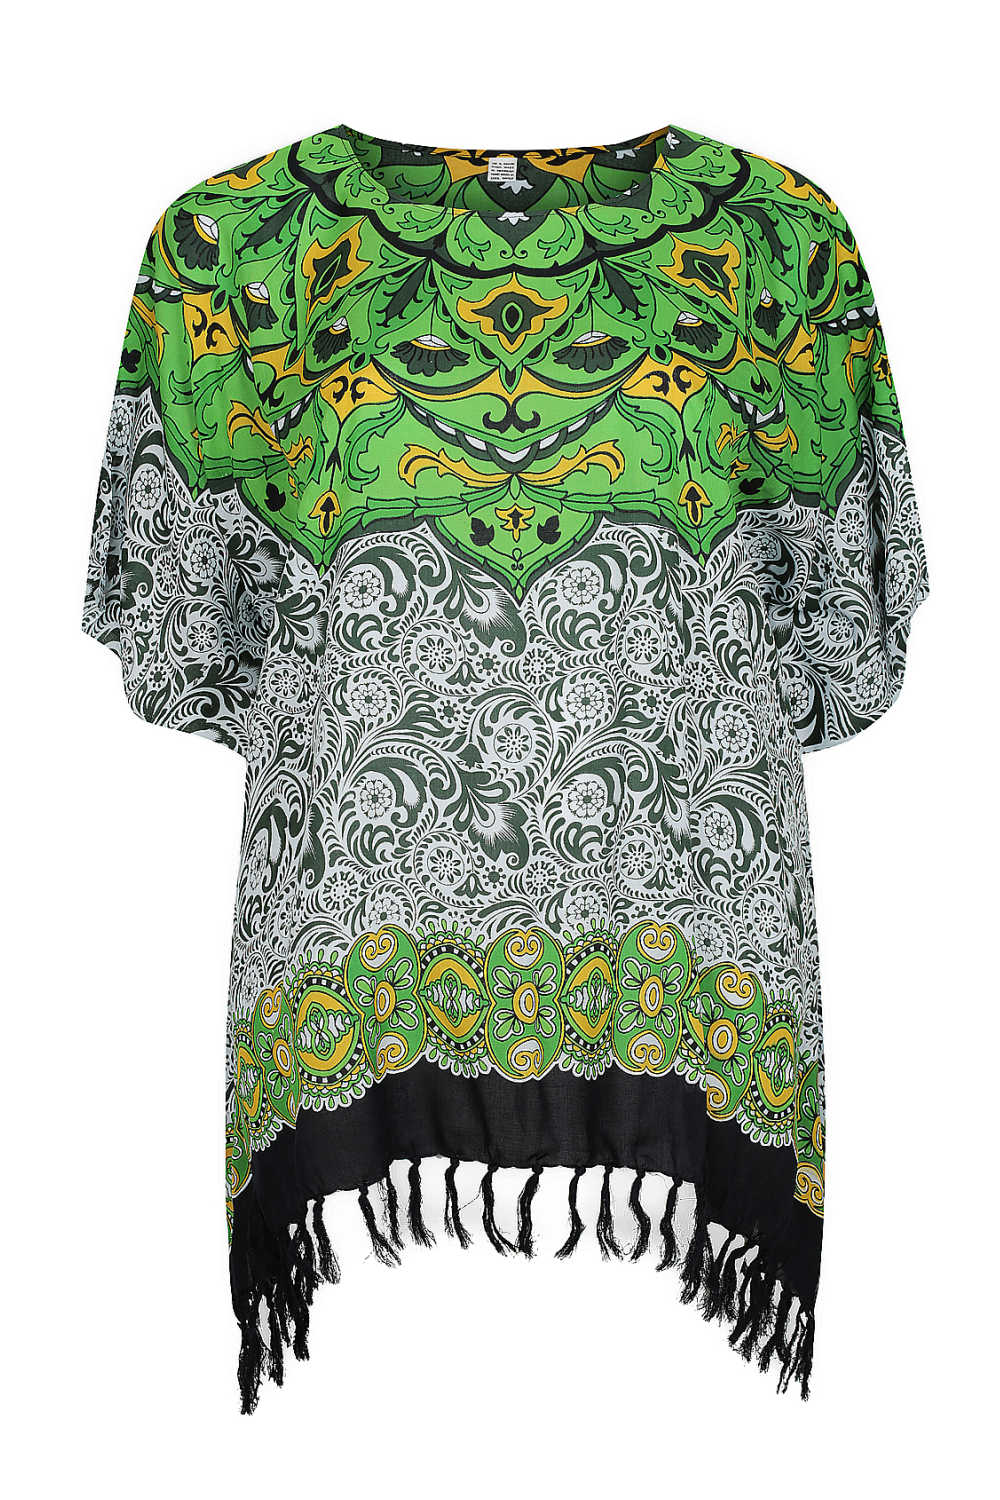 plus-size-kaftan-top-Mandala-design-green-white-black